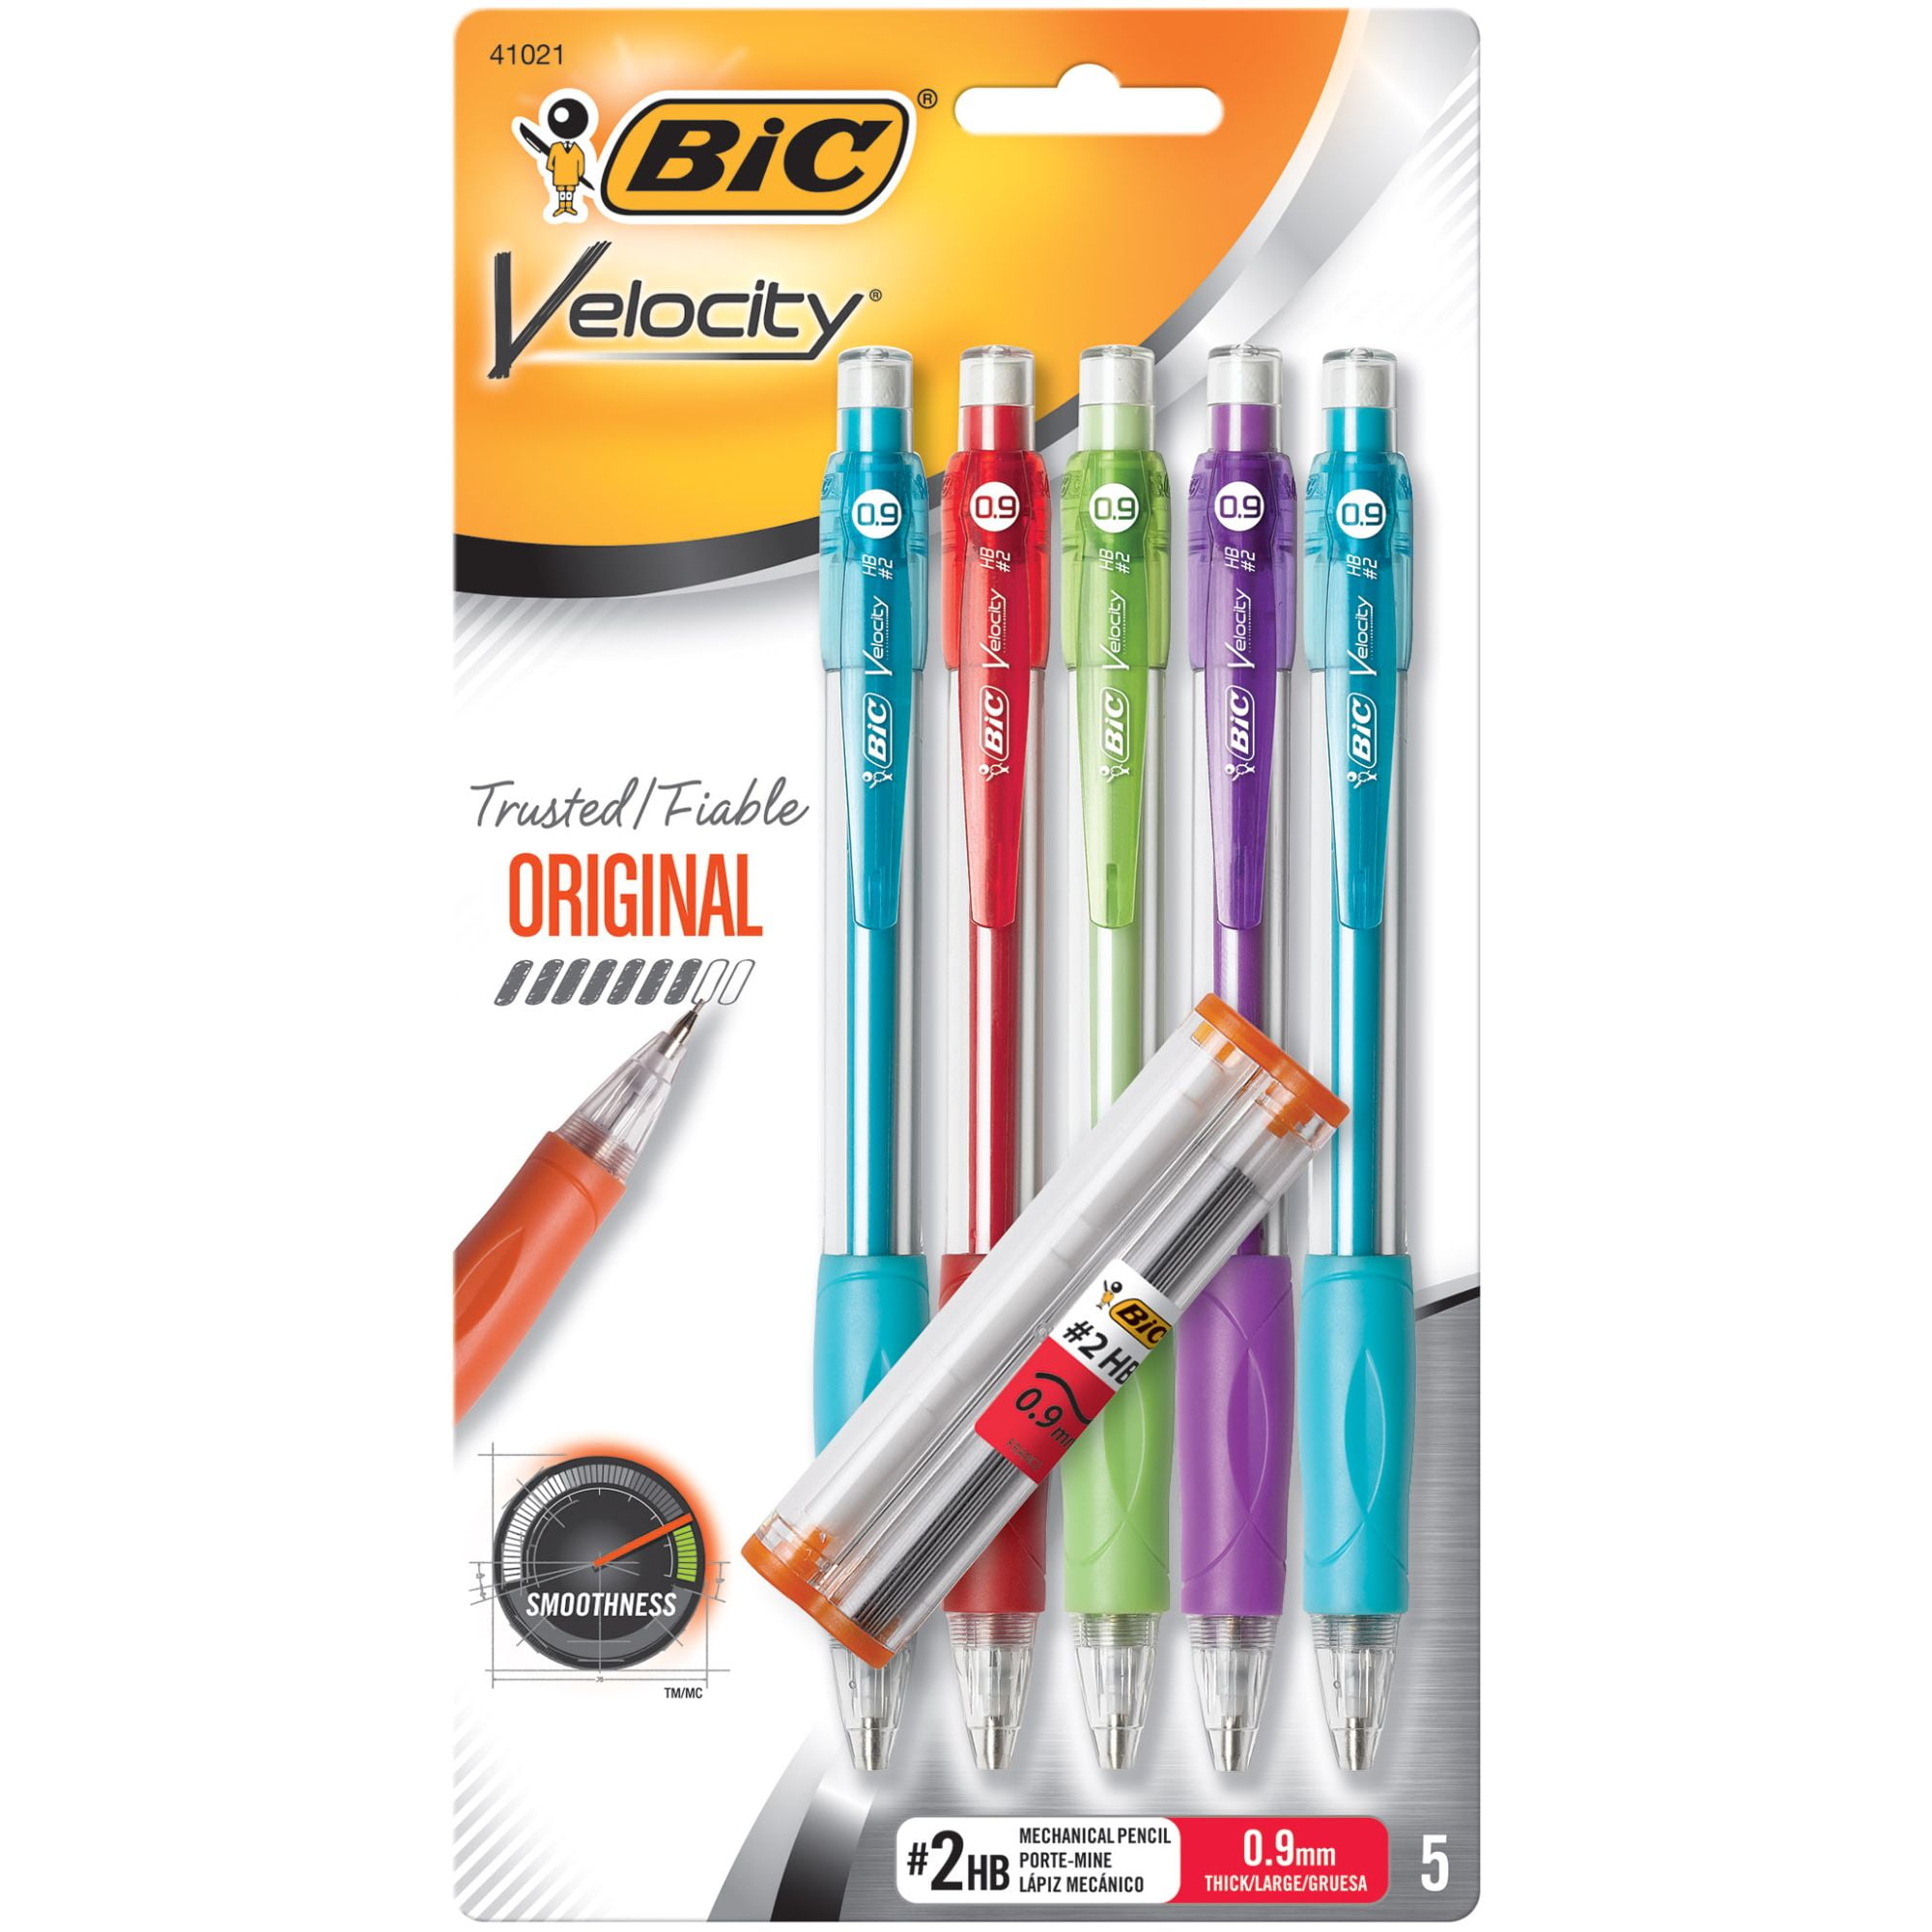 BIC Velocity Original Mechanical Pencil .9mm Turquoise Mv11bk for sale online 